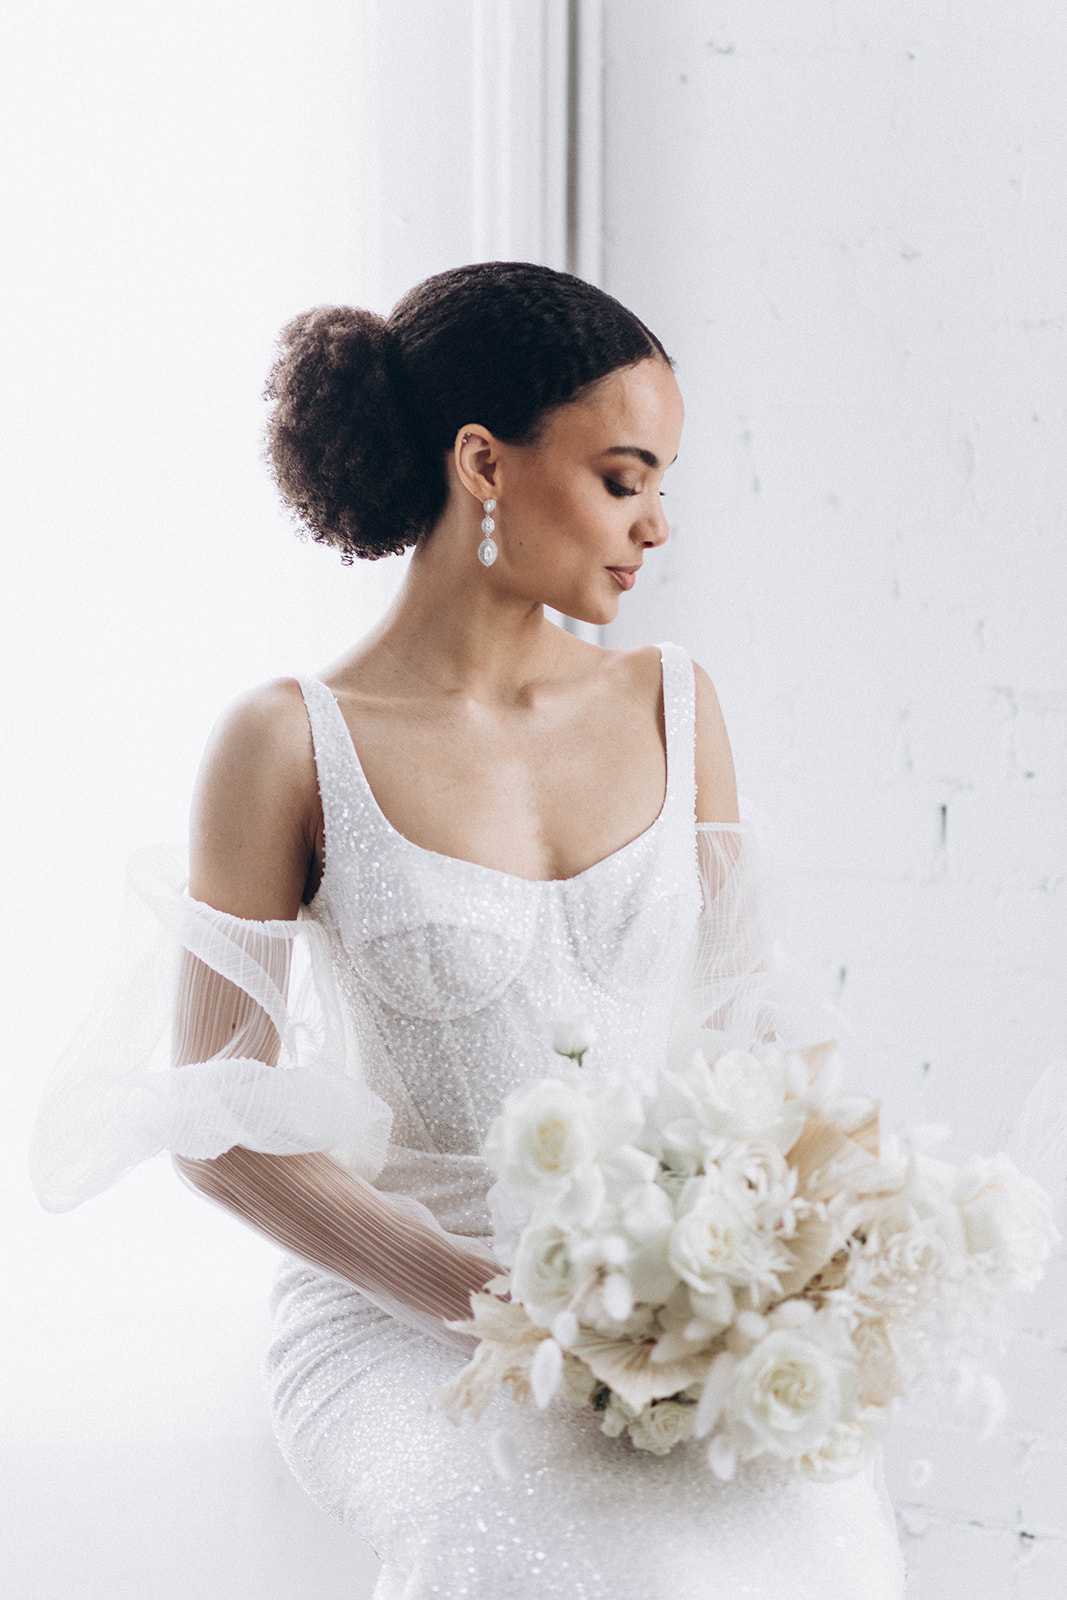 Modern Ivory & White Wedding Inspiration - Chic Bridal Style featured on the Brontë Bride Blog